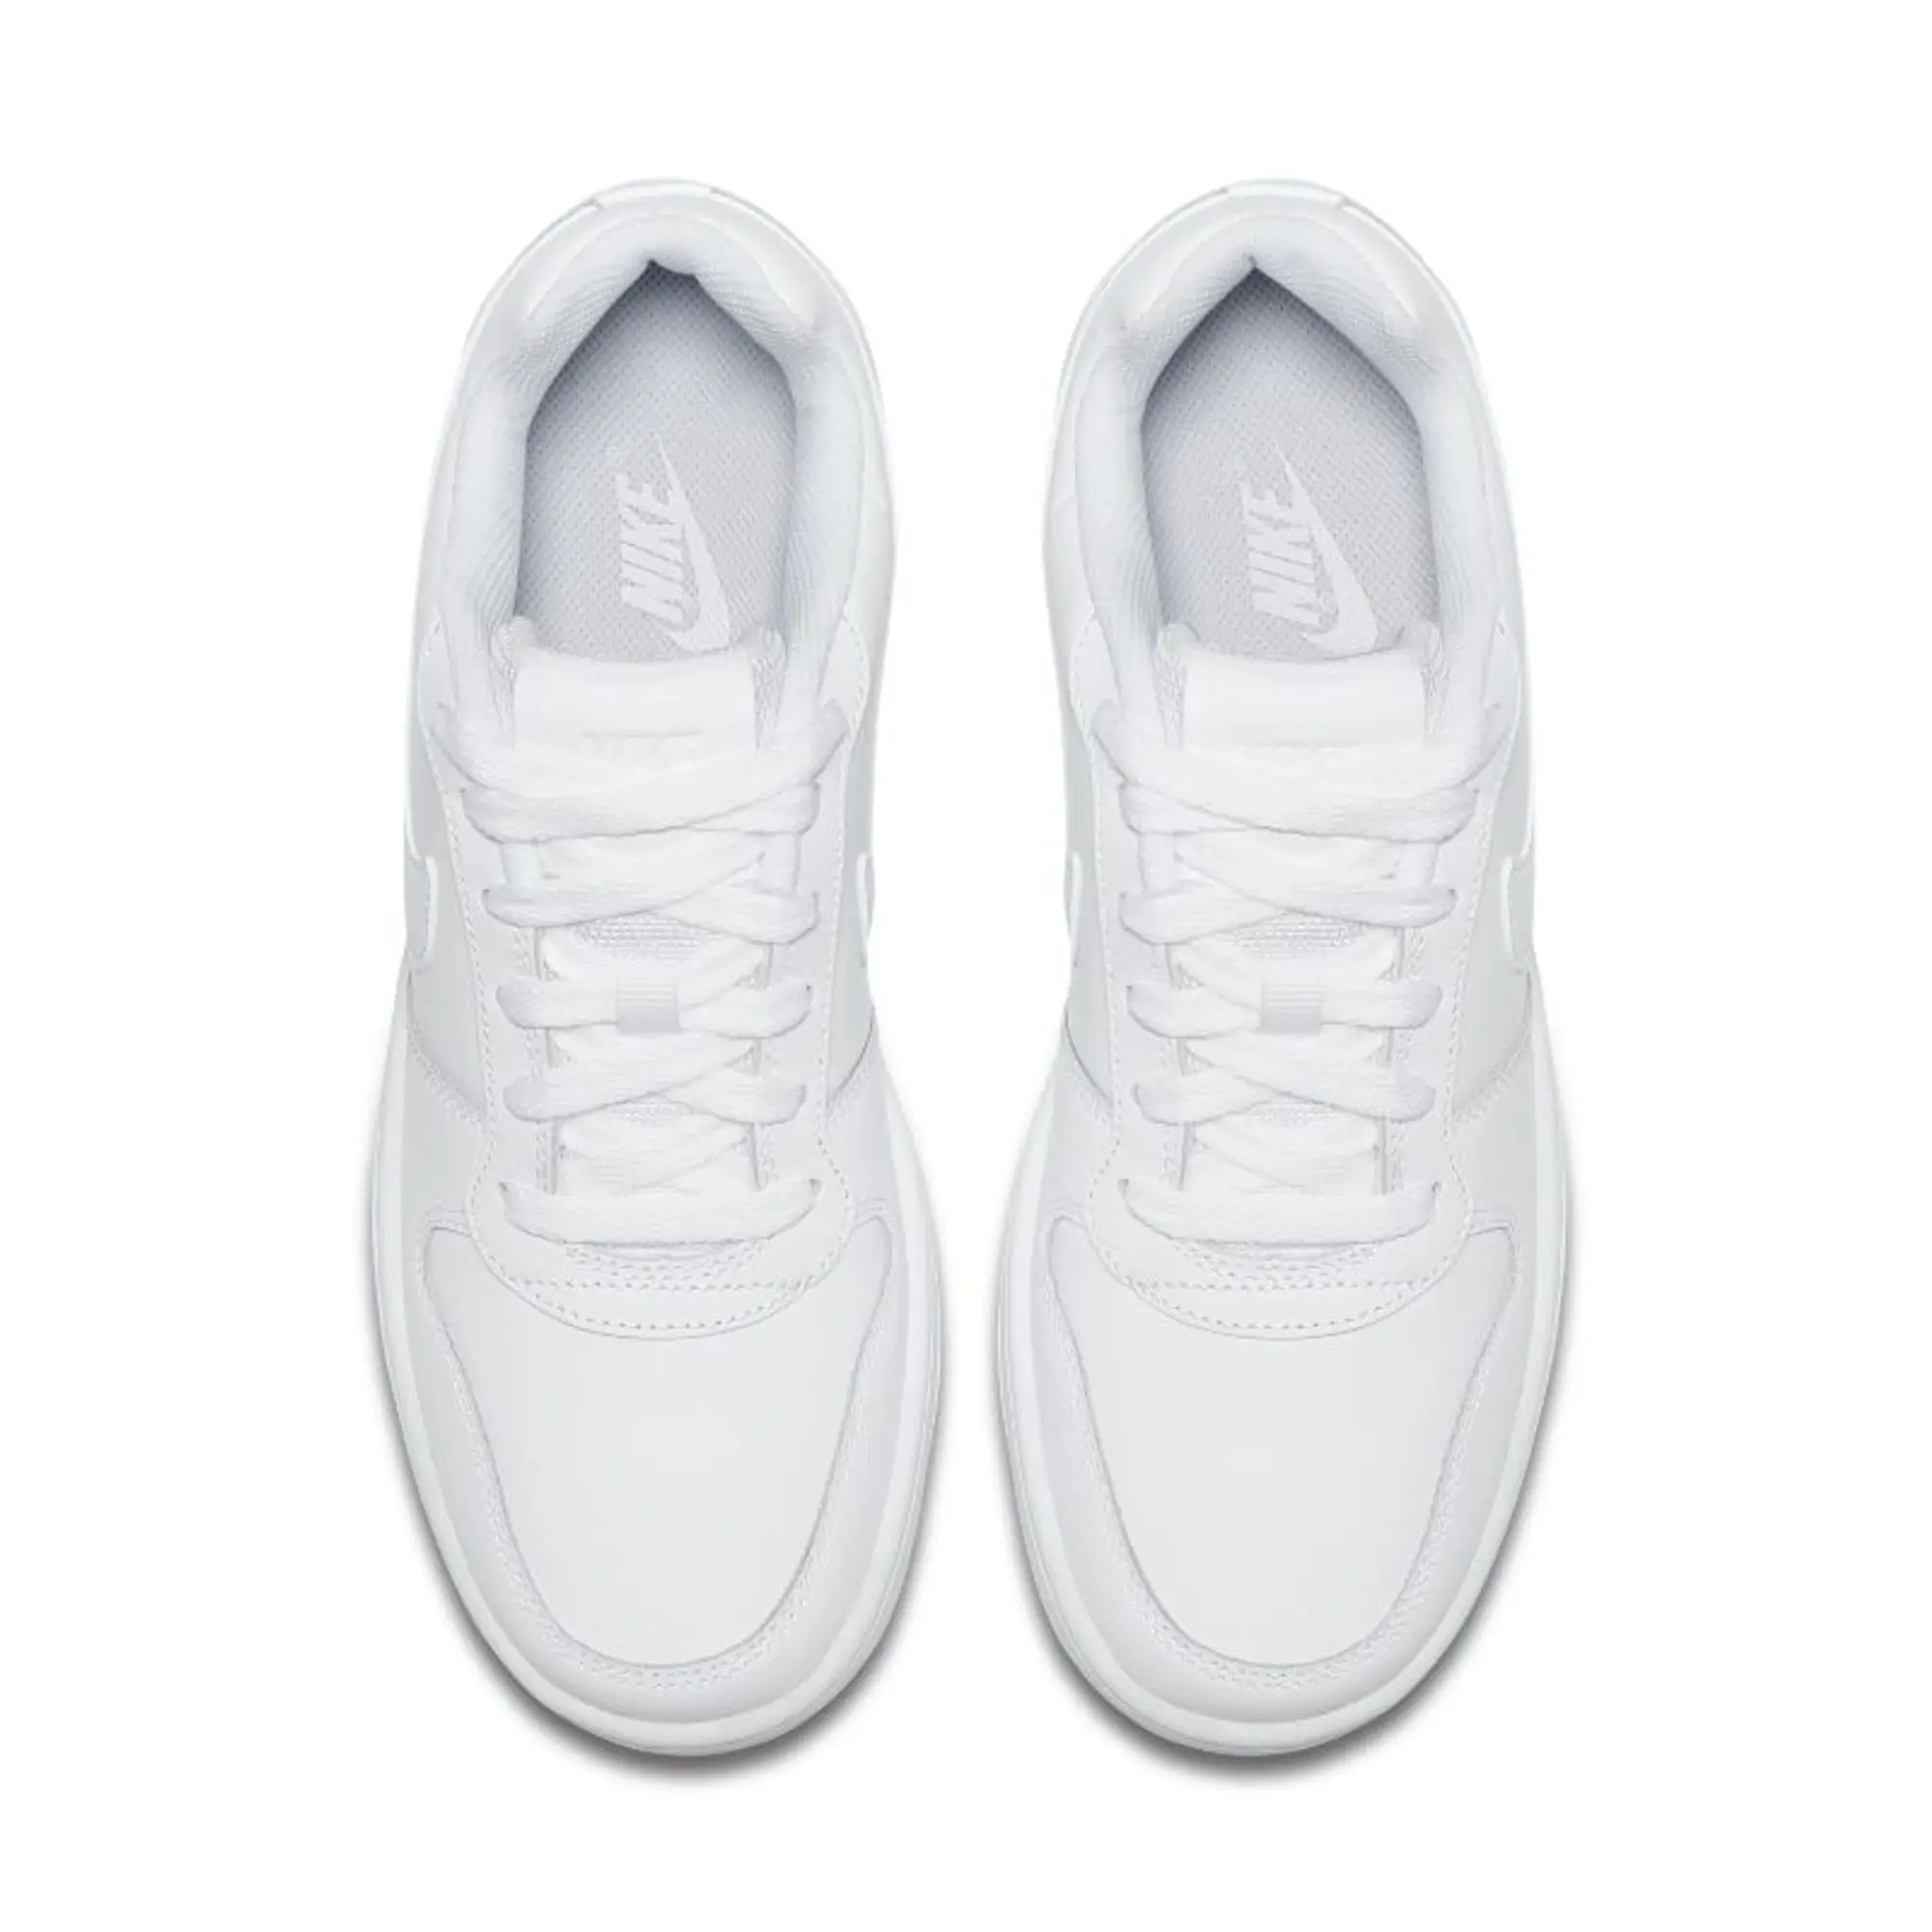 Nike Ebernon Low Women's Shoe - White